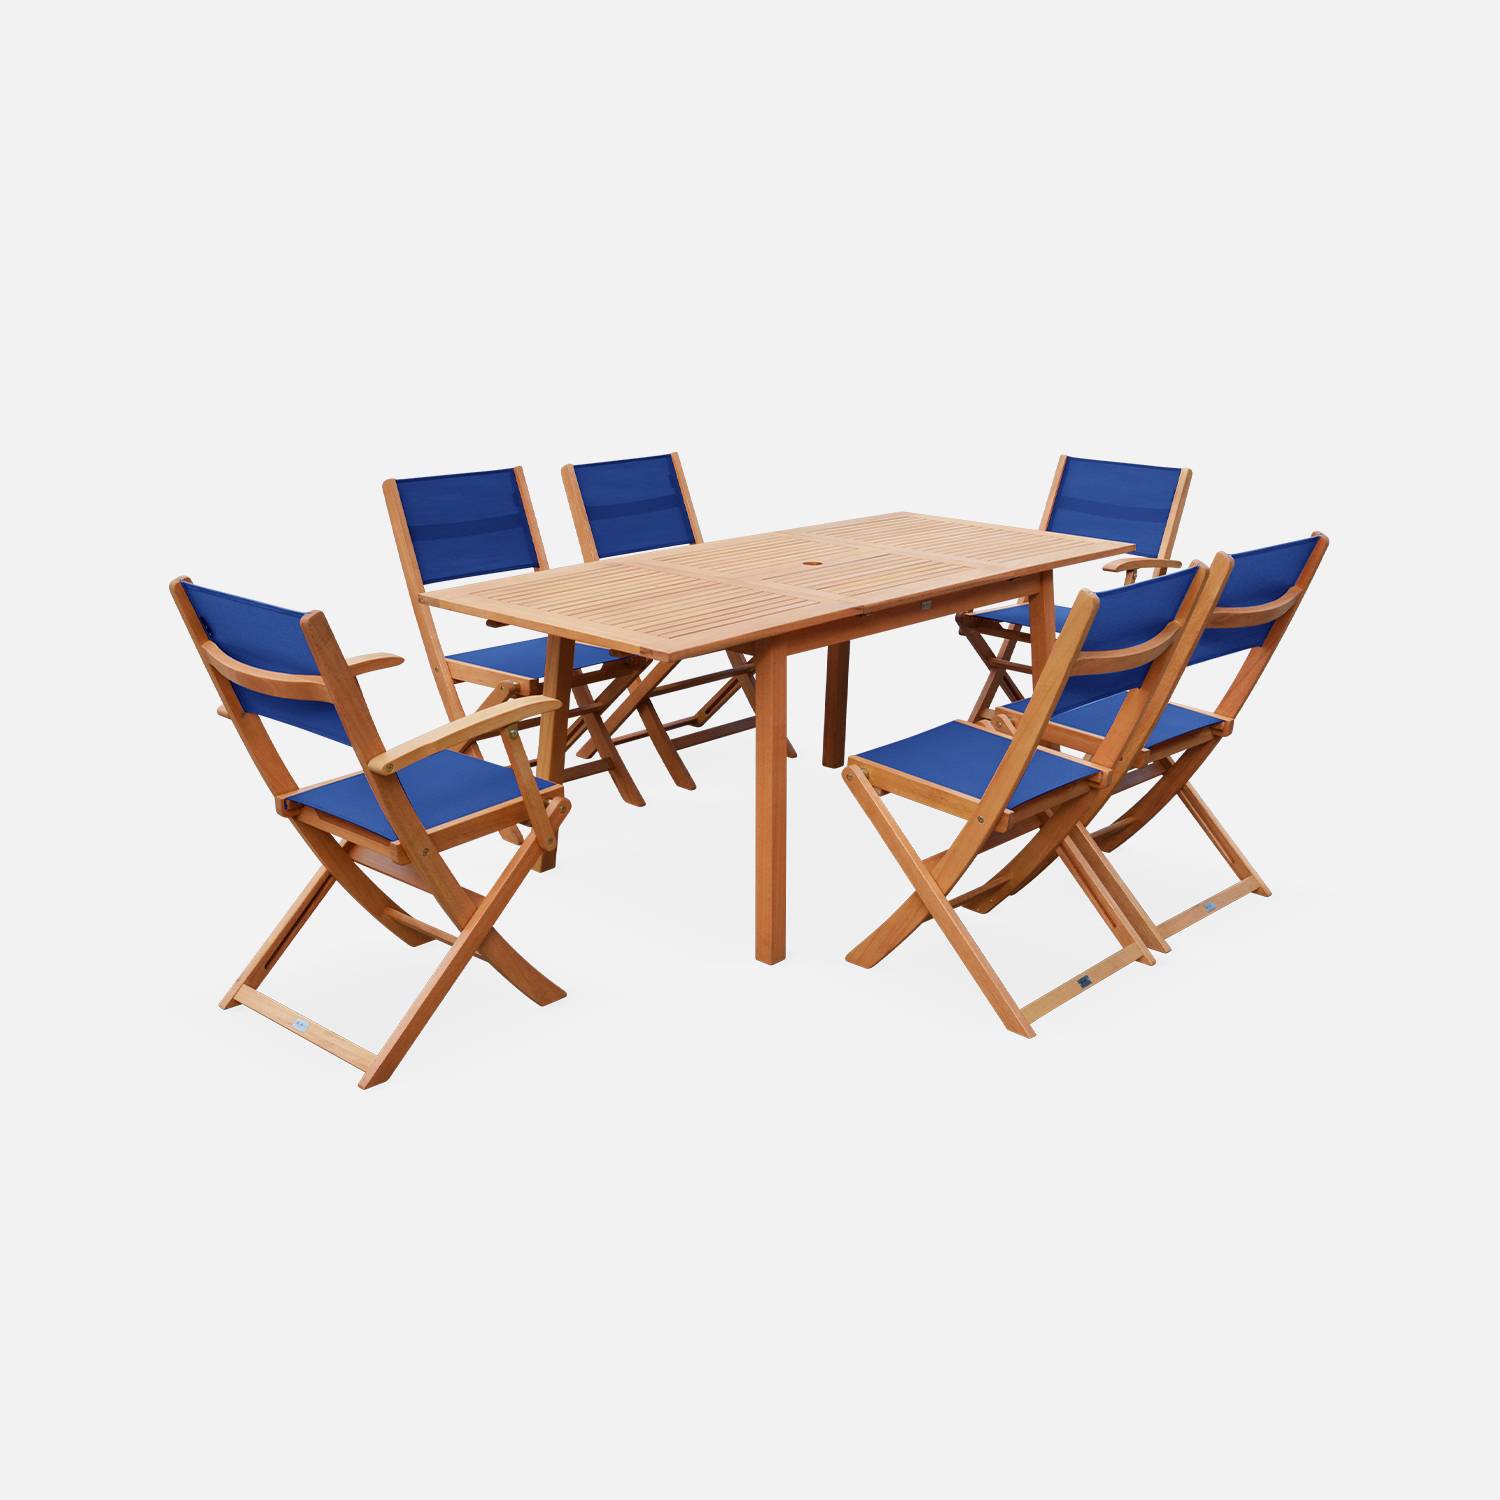 Conjunto de mesa e cadeiras de jardim em madeira e textileno, Azul, 6 lugares, eucalipto, extensível, 120/180 cm Photo1